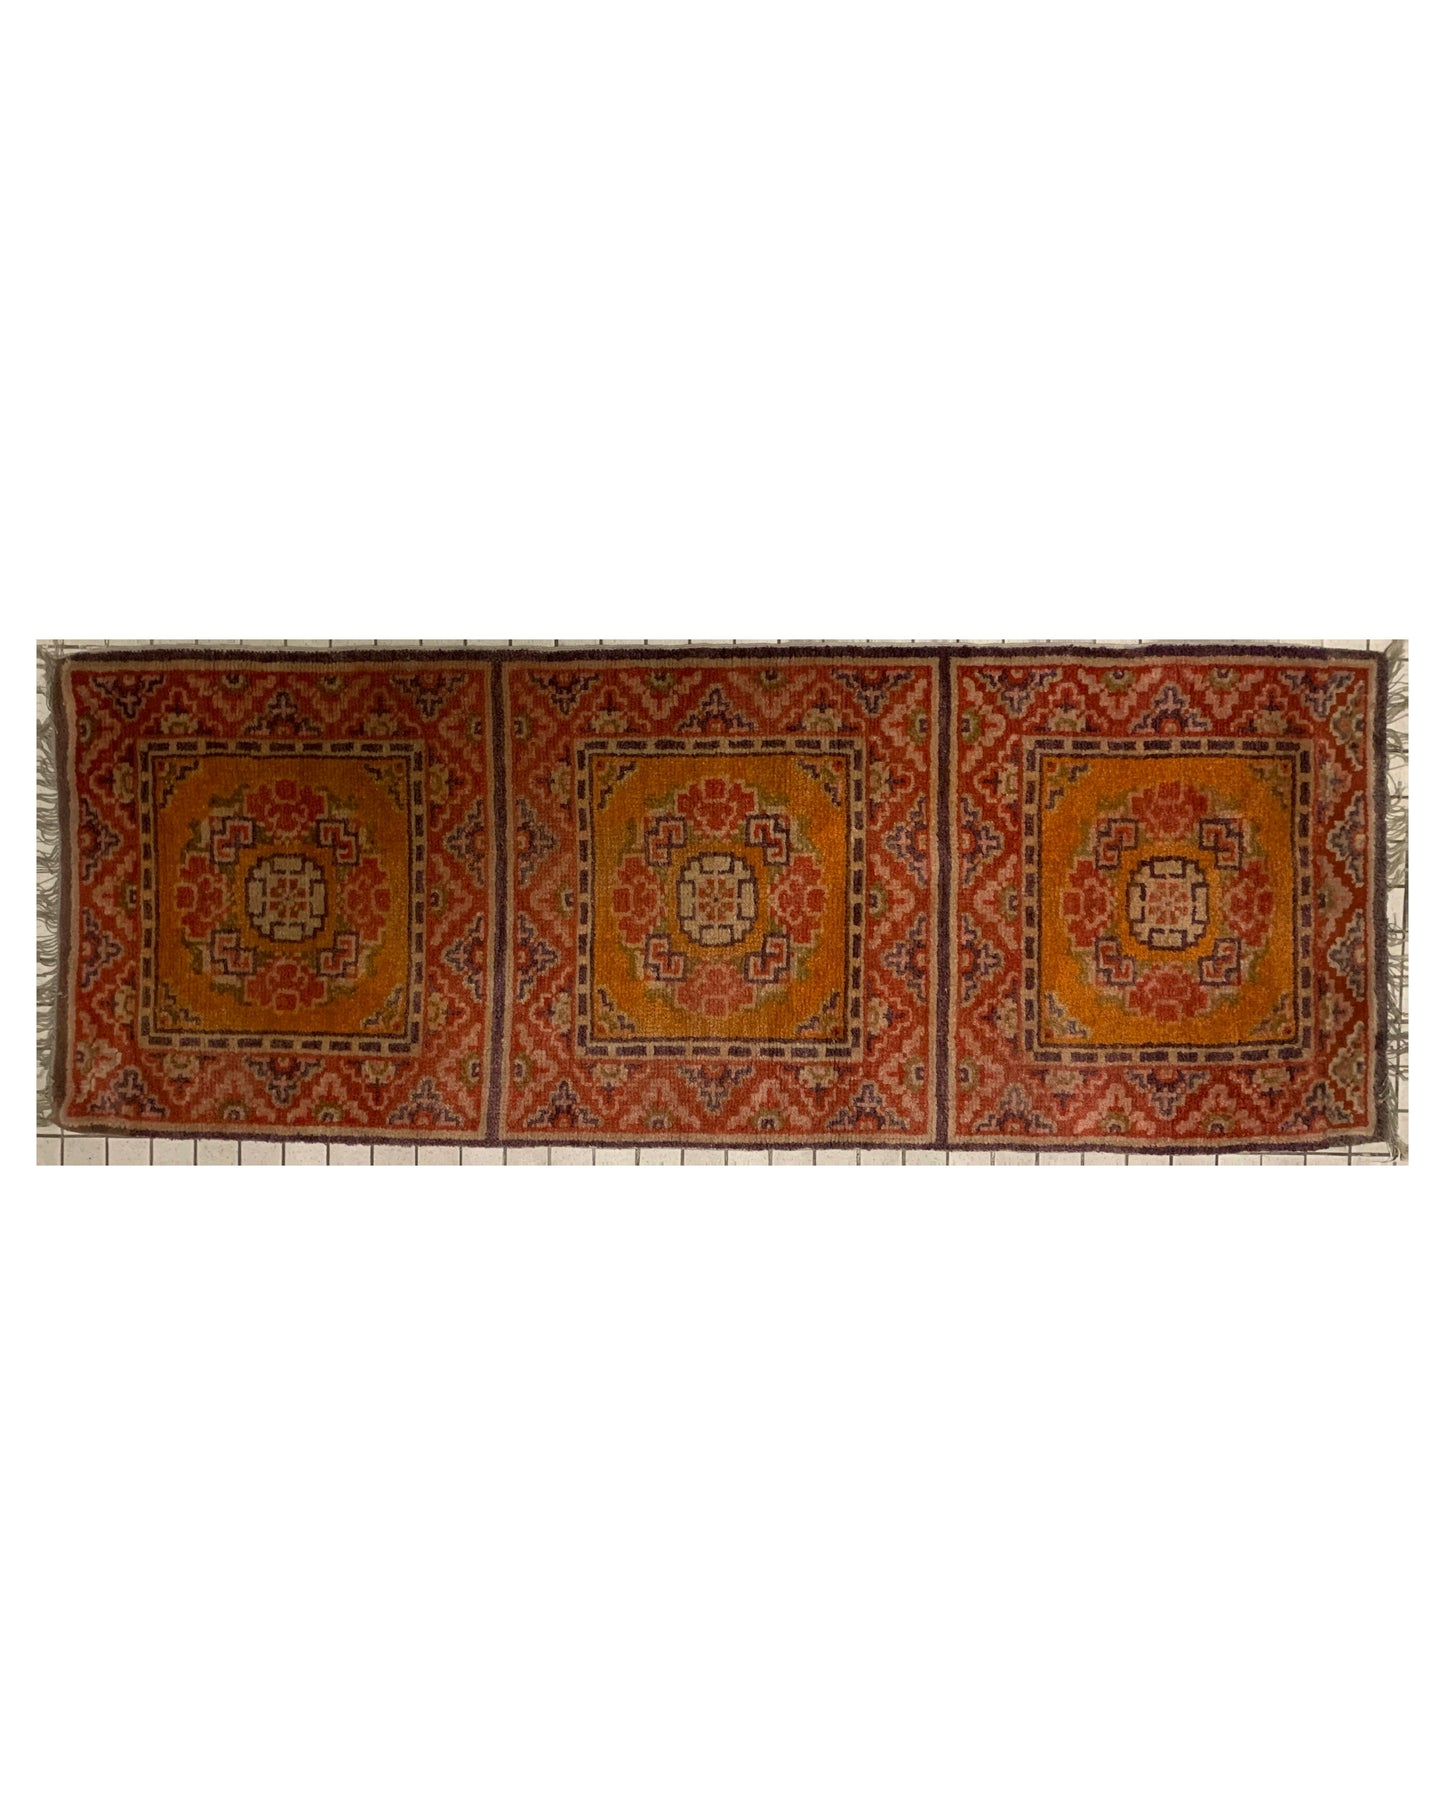 An antique triple seater Tibetan meditation rug